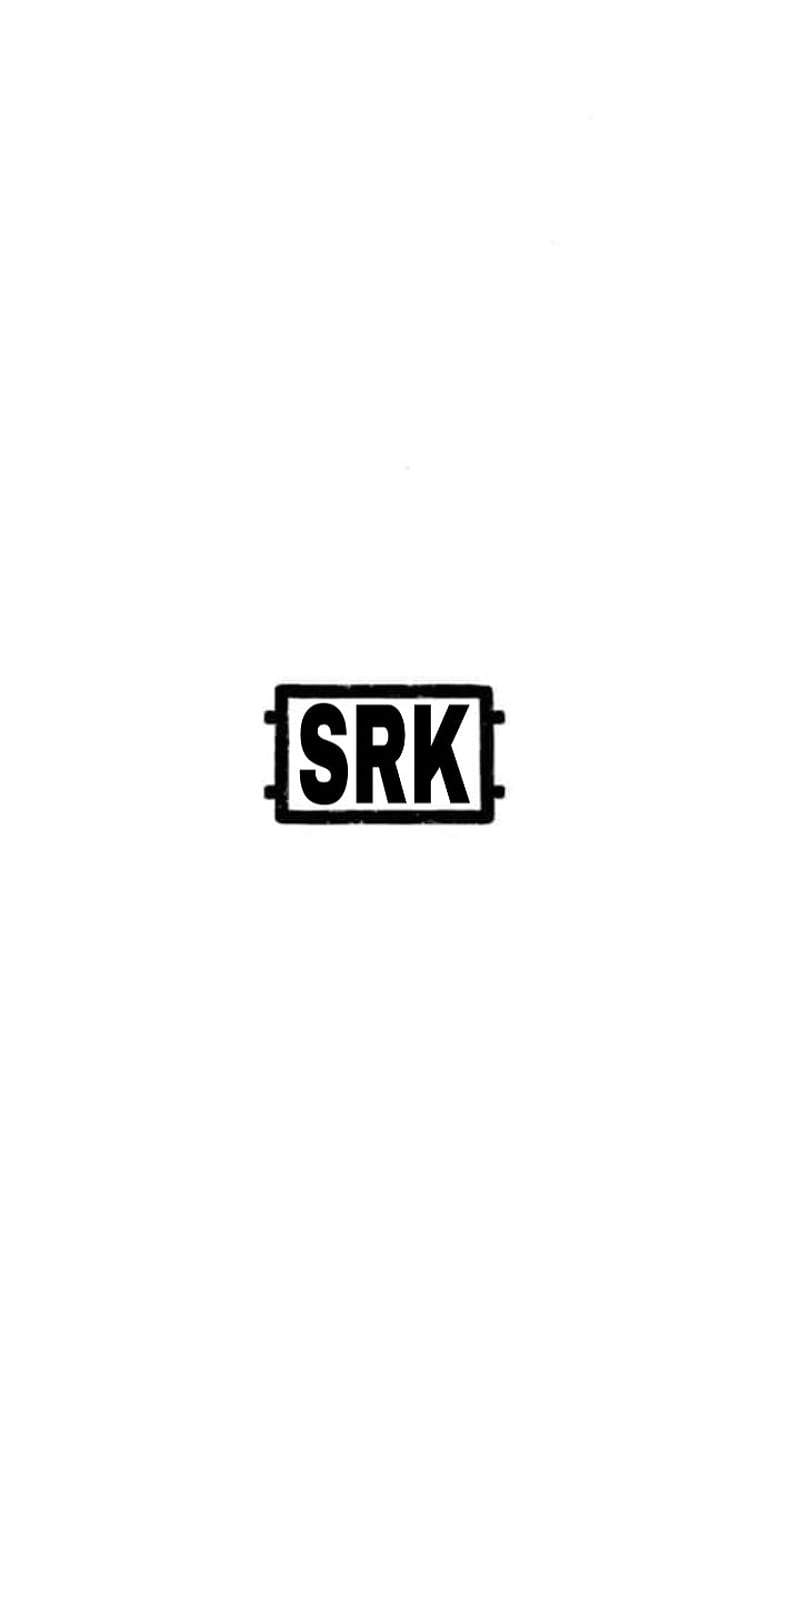 Srk abstract technology logo design on white Vector Image